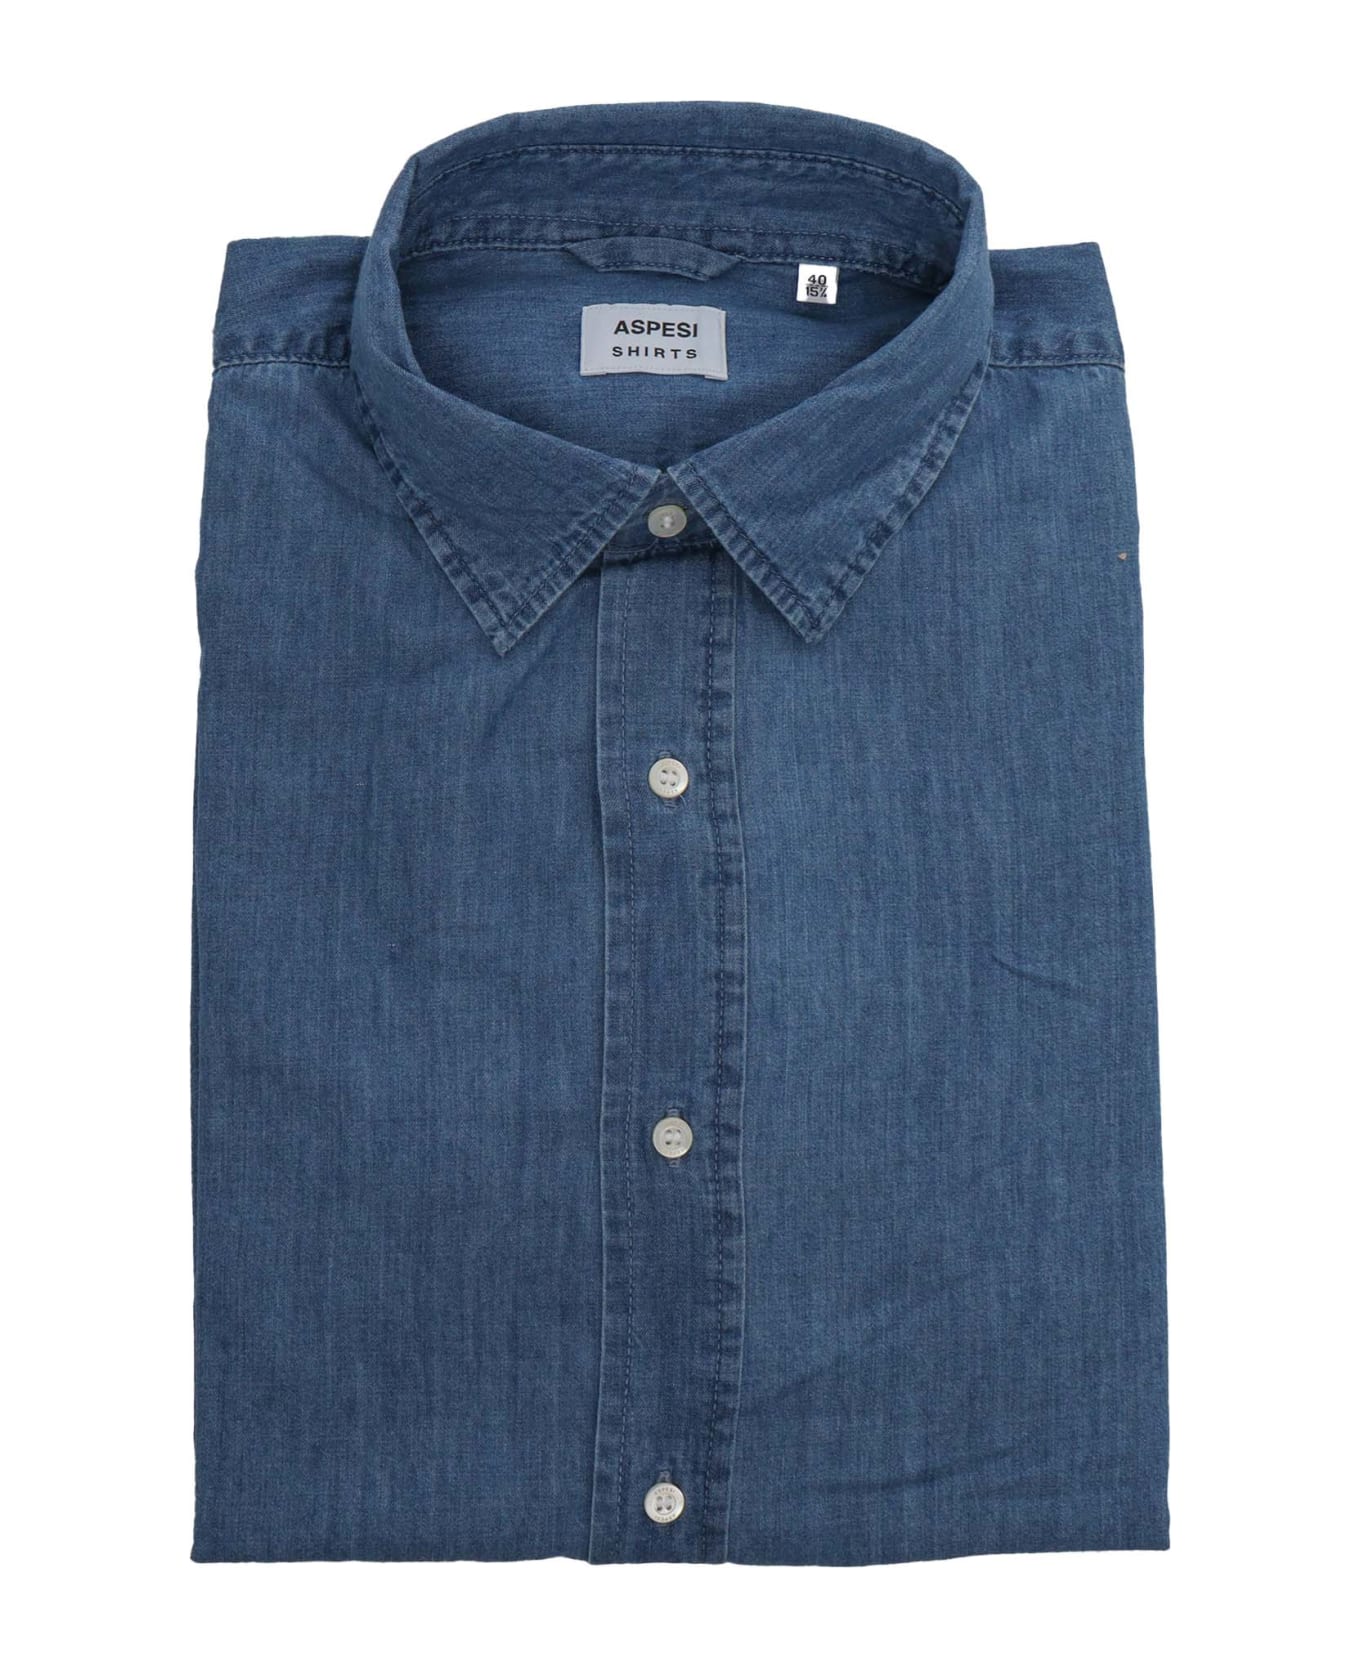 Aspesi Jeans Shirt - BLUE